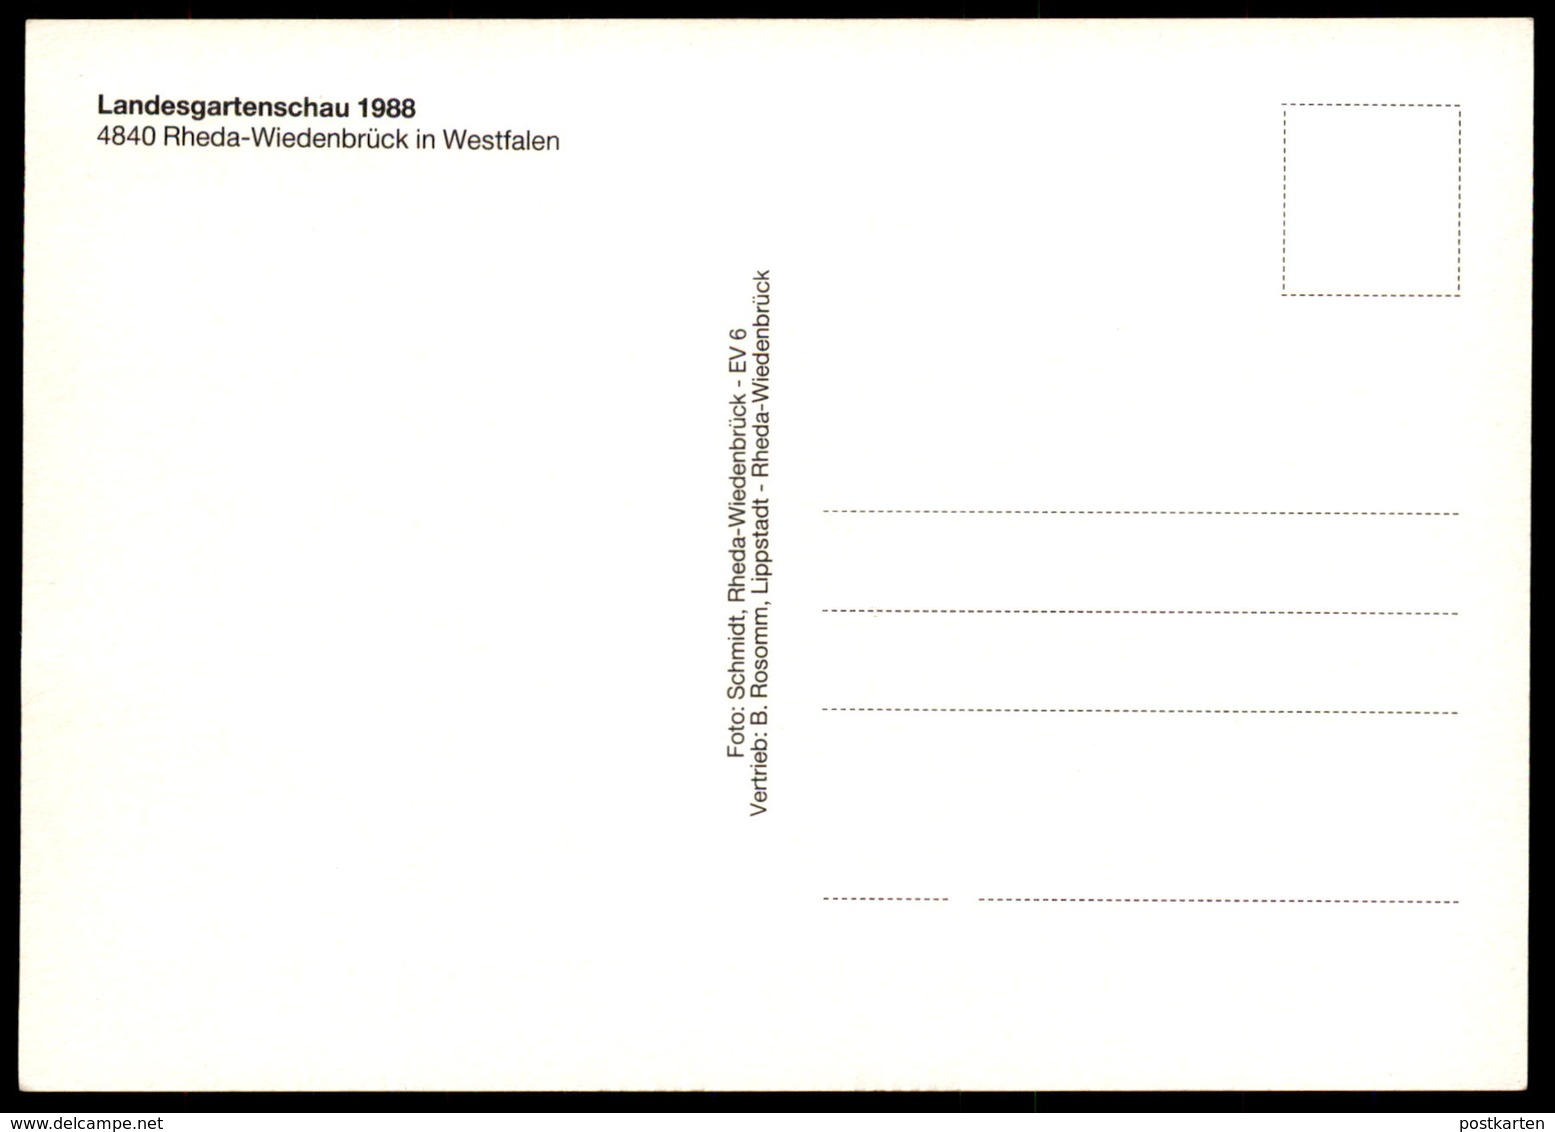 ÄLTERE POSTKARTE LANDESGARTENSCHAU 1988 REHDA-WIEDENBRÜCK Narzissen Narzisse Daffodil Cpa Postcard AK Ansichtskarte - Rheda-Wiedenbrueck